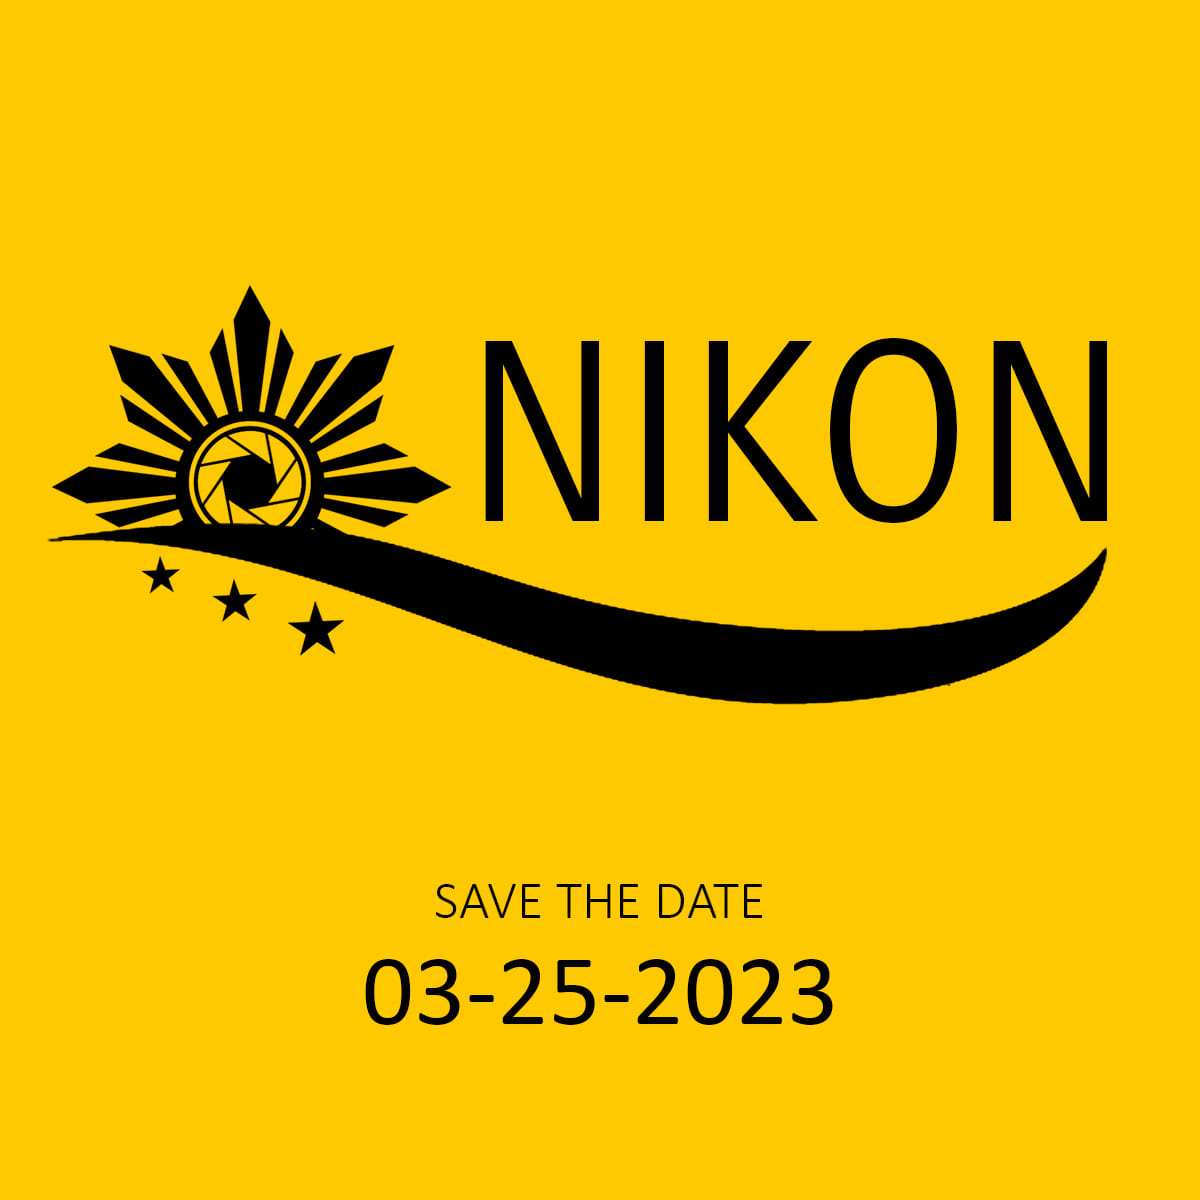 nikon logo high resolution